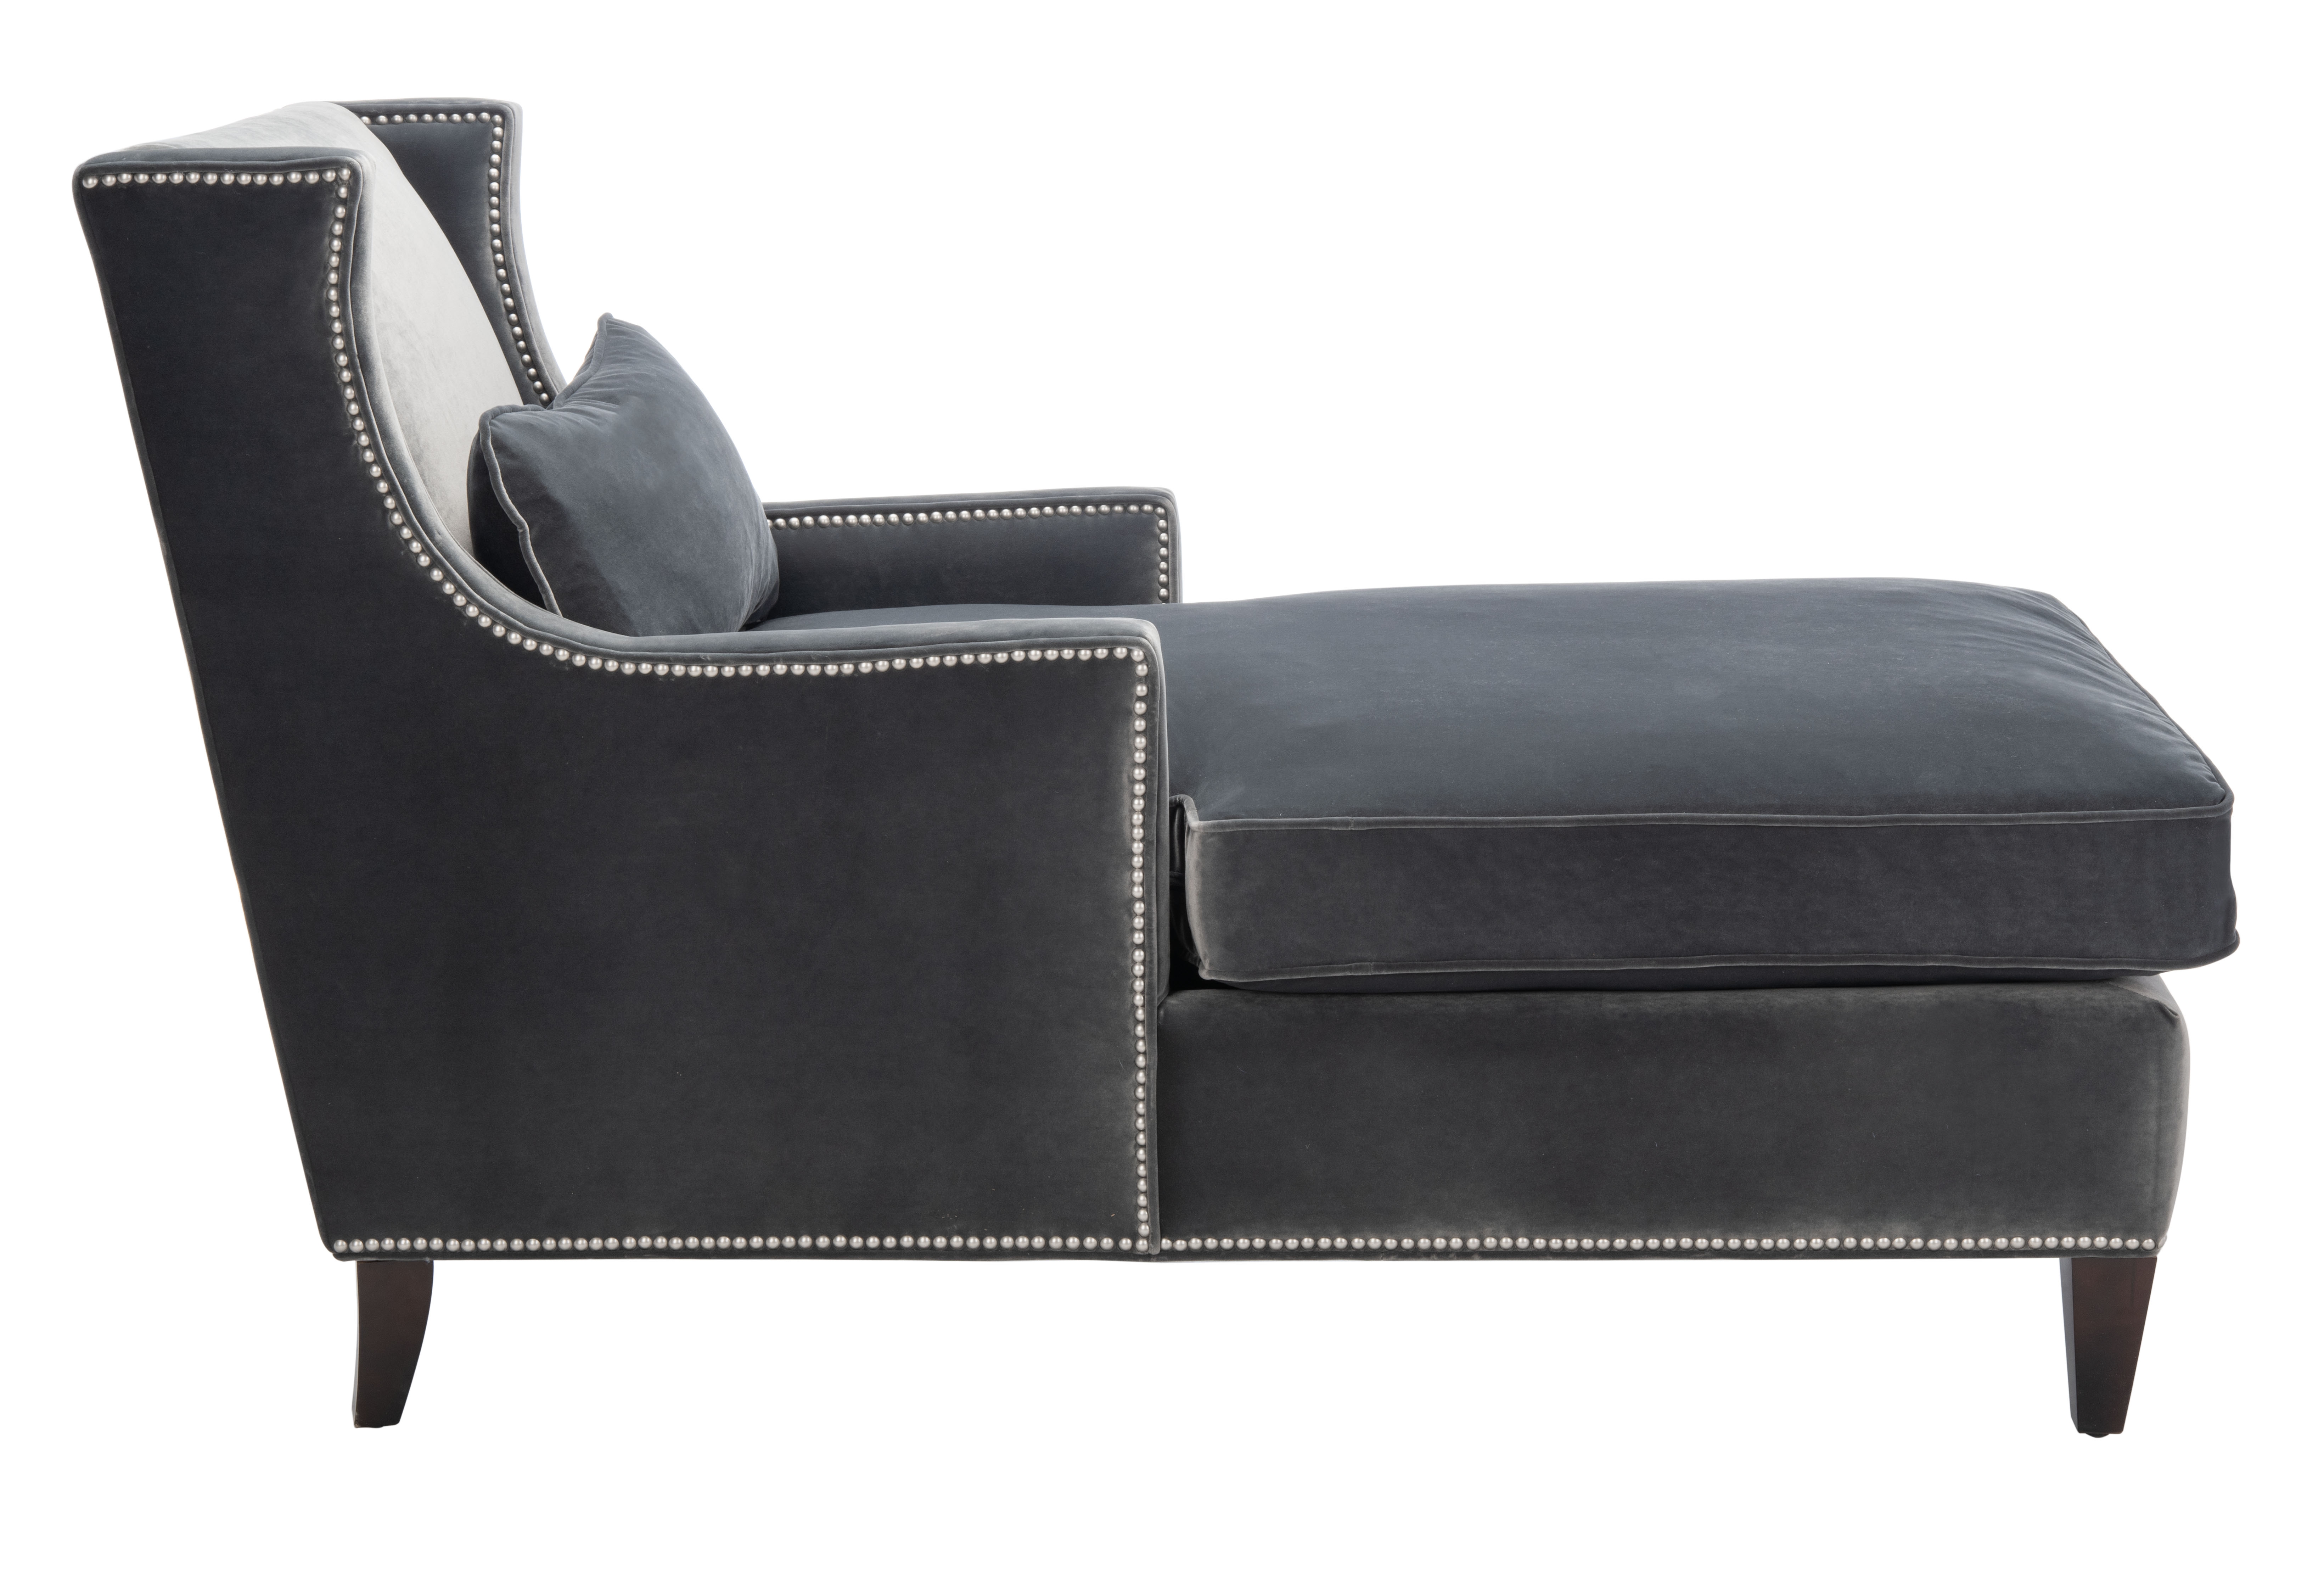 Vitali Studded Chaise - Charcoal - Arlo Home - Image 2